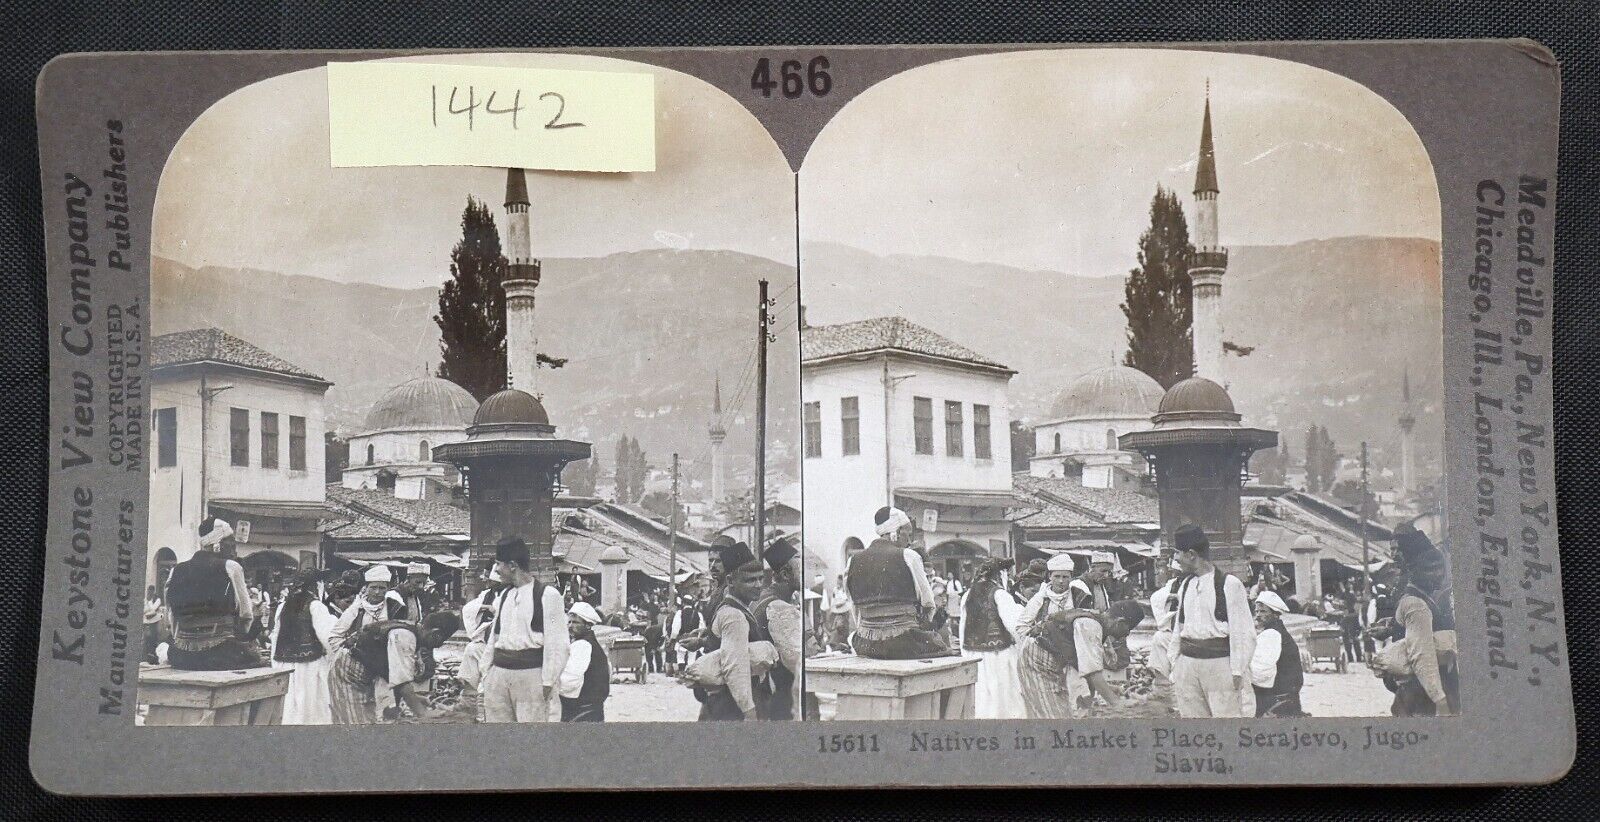 Keystone Stereoview Sarajevo Jugoslavia 15611 Natives in Market